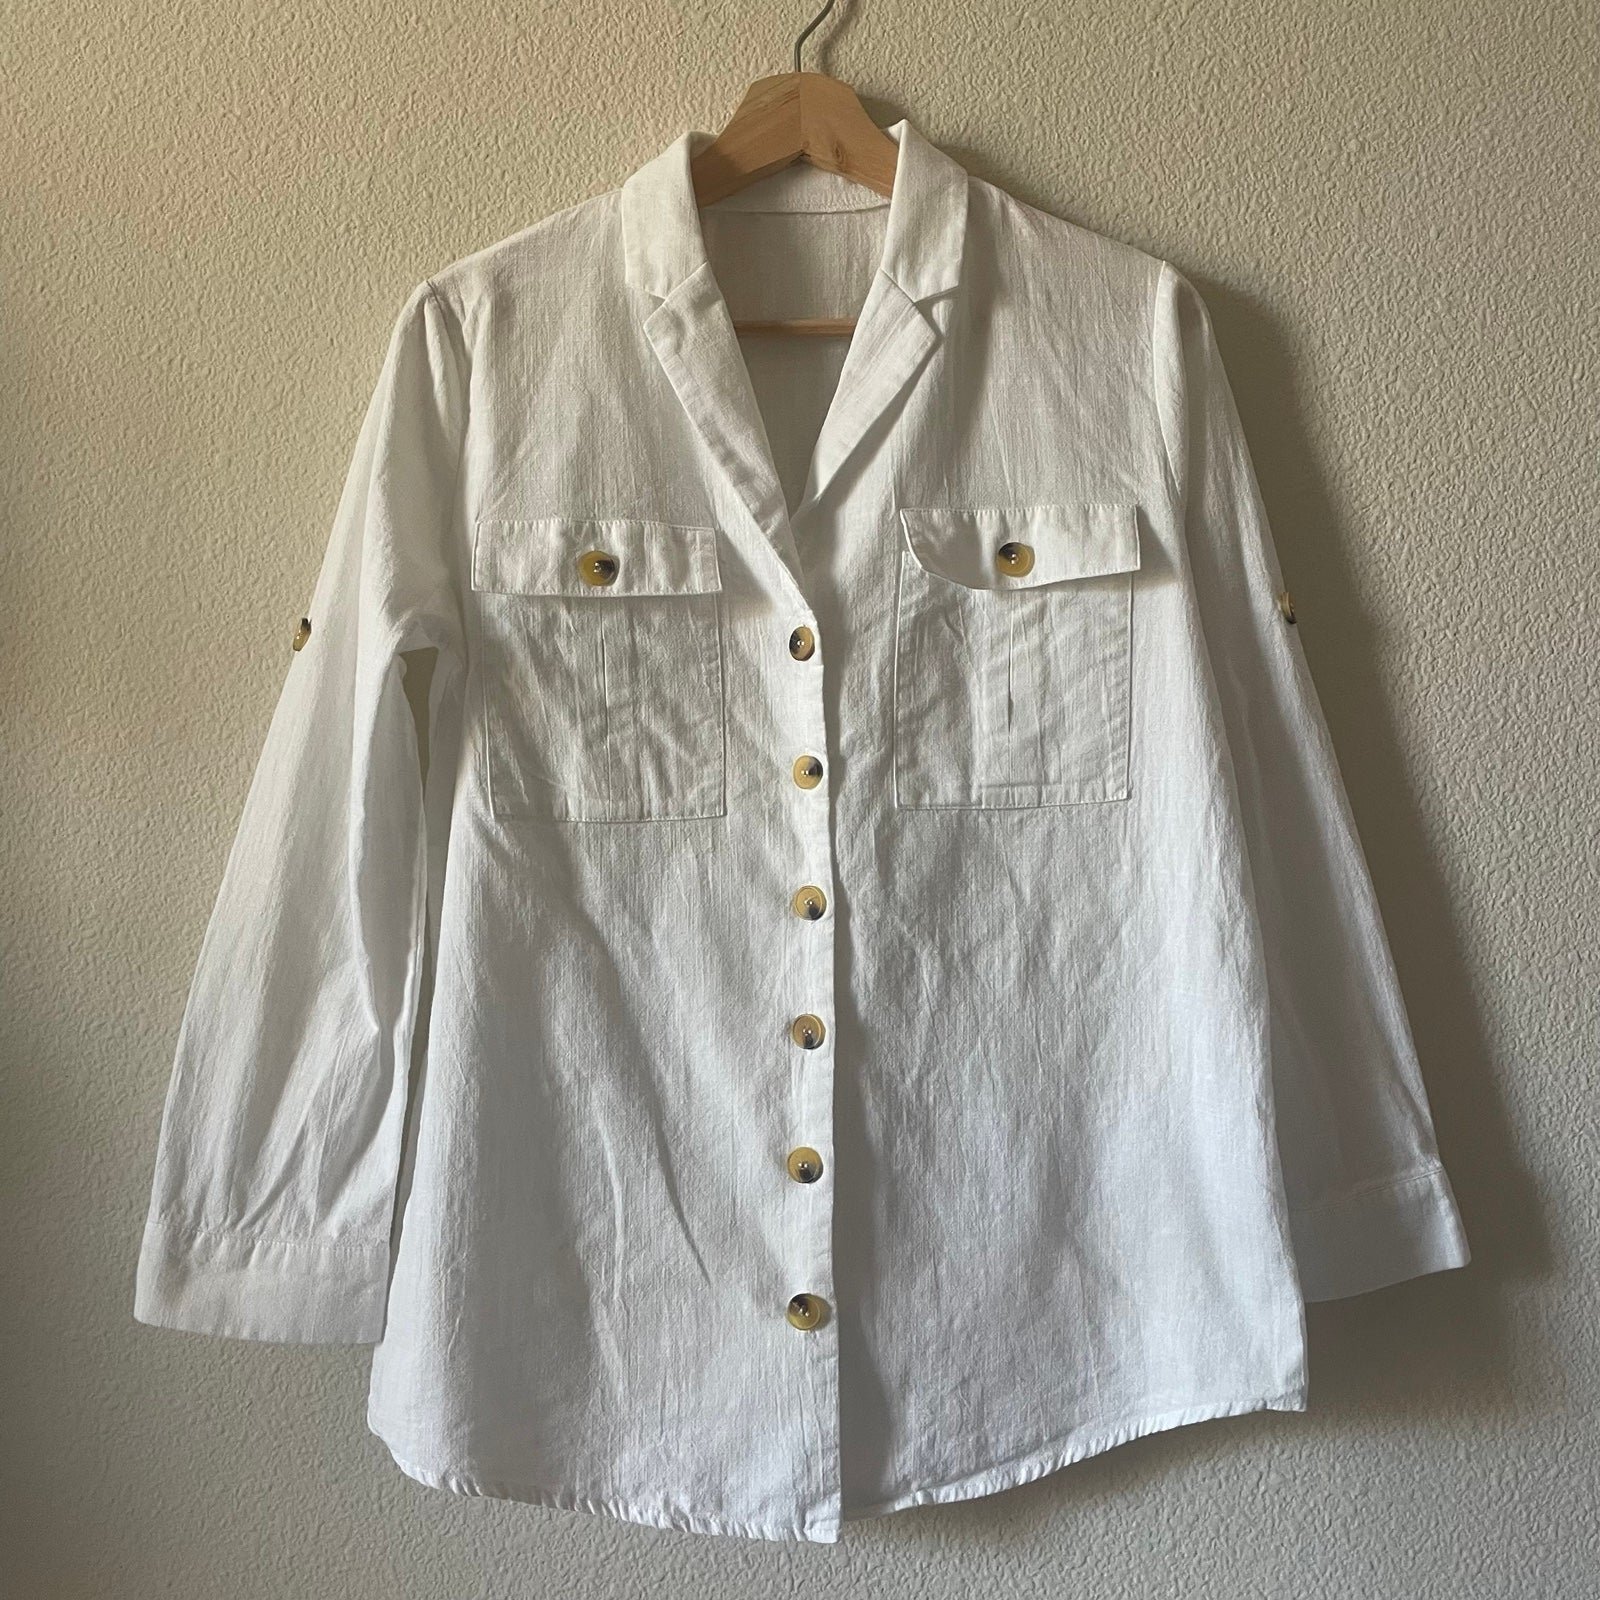 Perfect White cotton button up shirt ONURDAwOS High Quaity